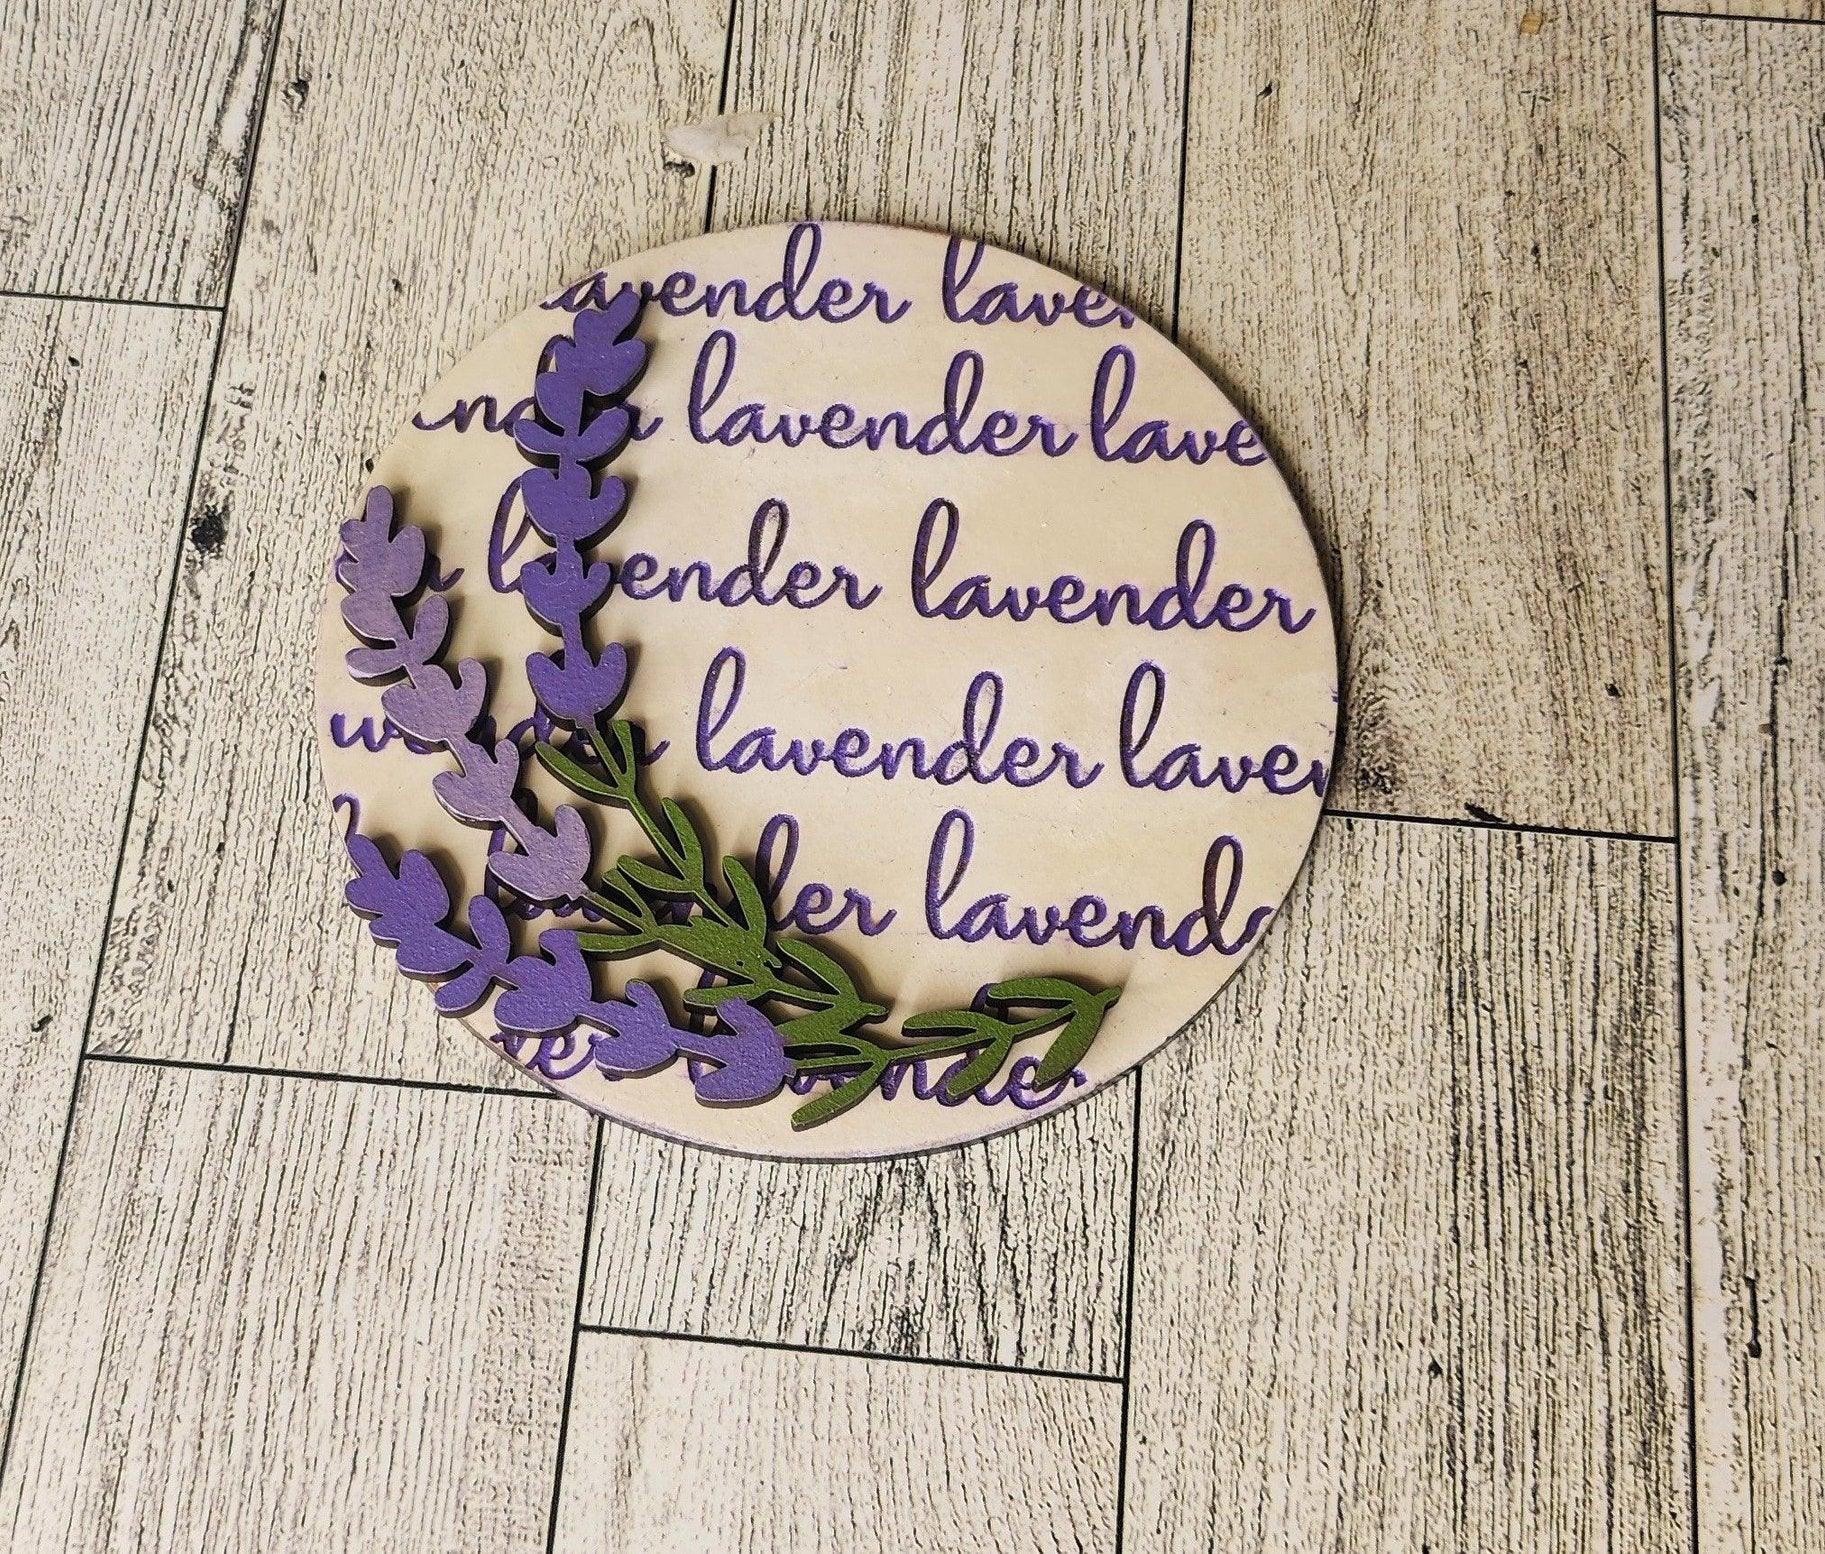 Premade Lavender Tiered Tray Decor, Fresh Cut Lavender display - RusticFarmhouseDecor